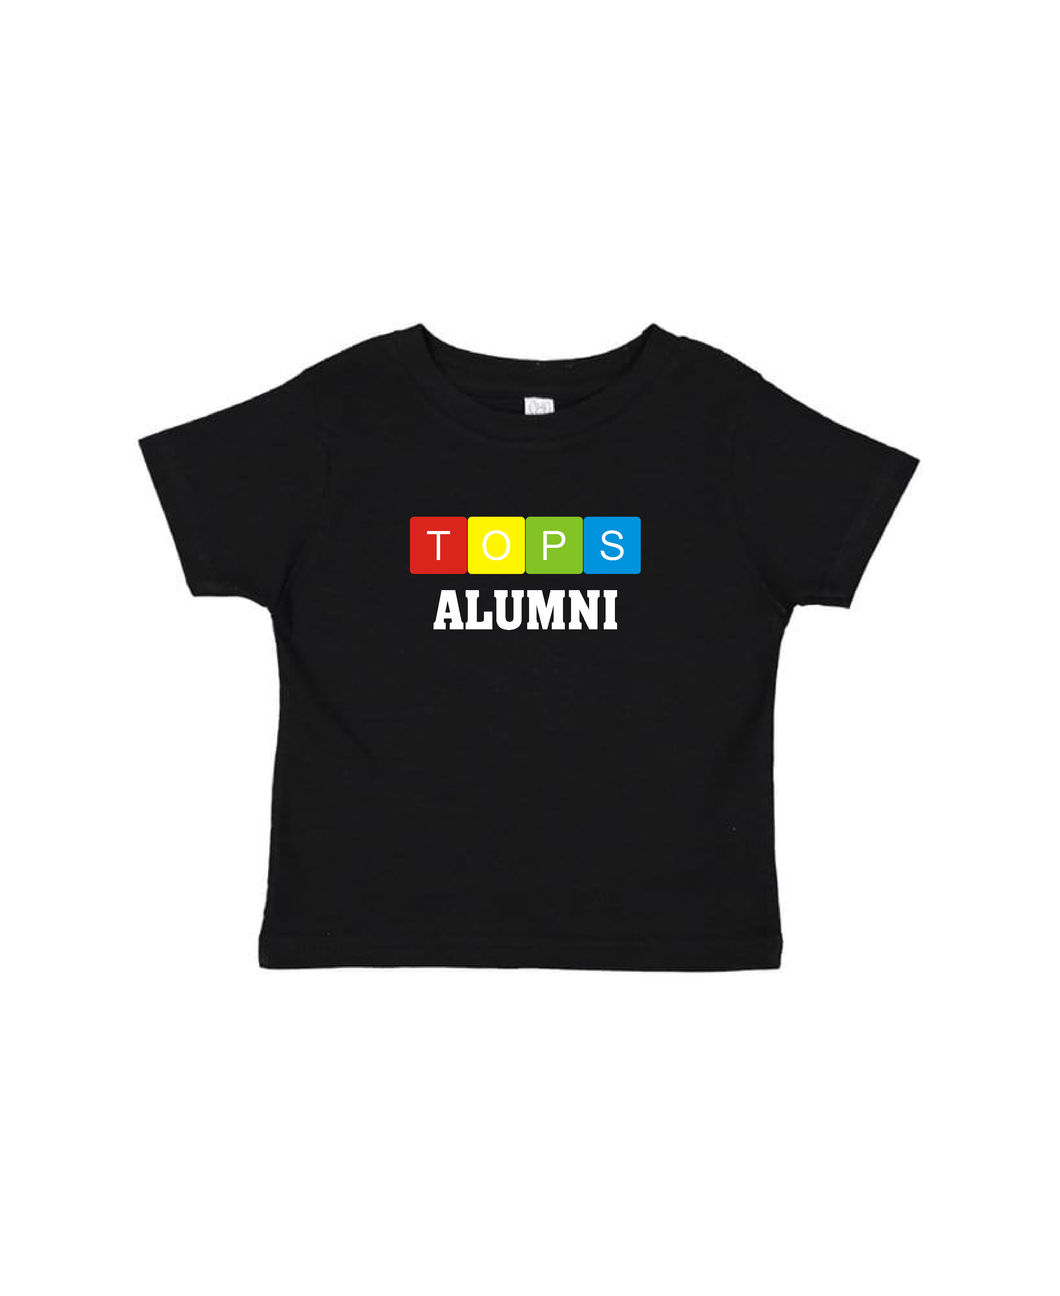 Toddler Short Sleeve T-Shirt - ALUMNI with TOPS blocks logo